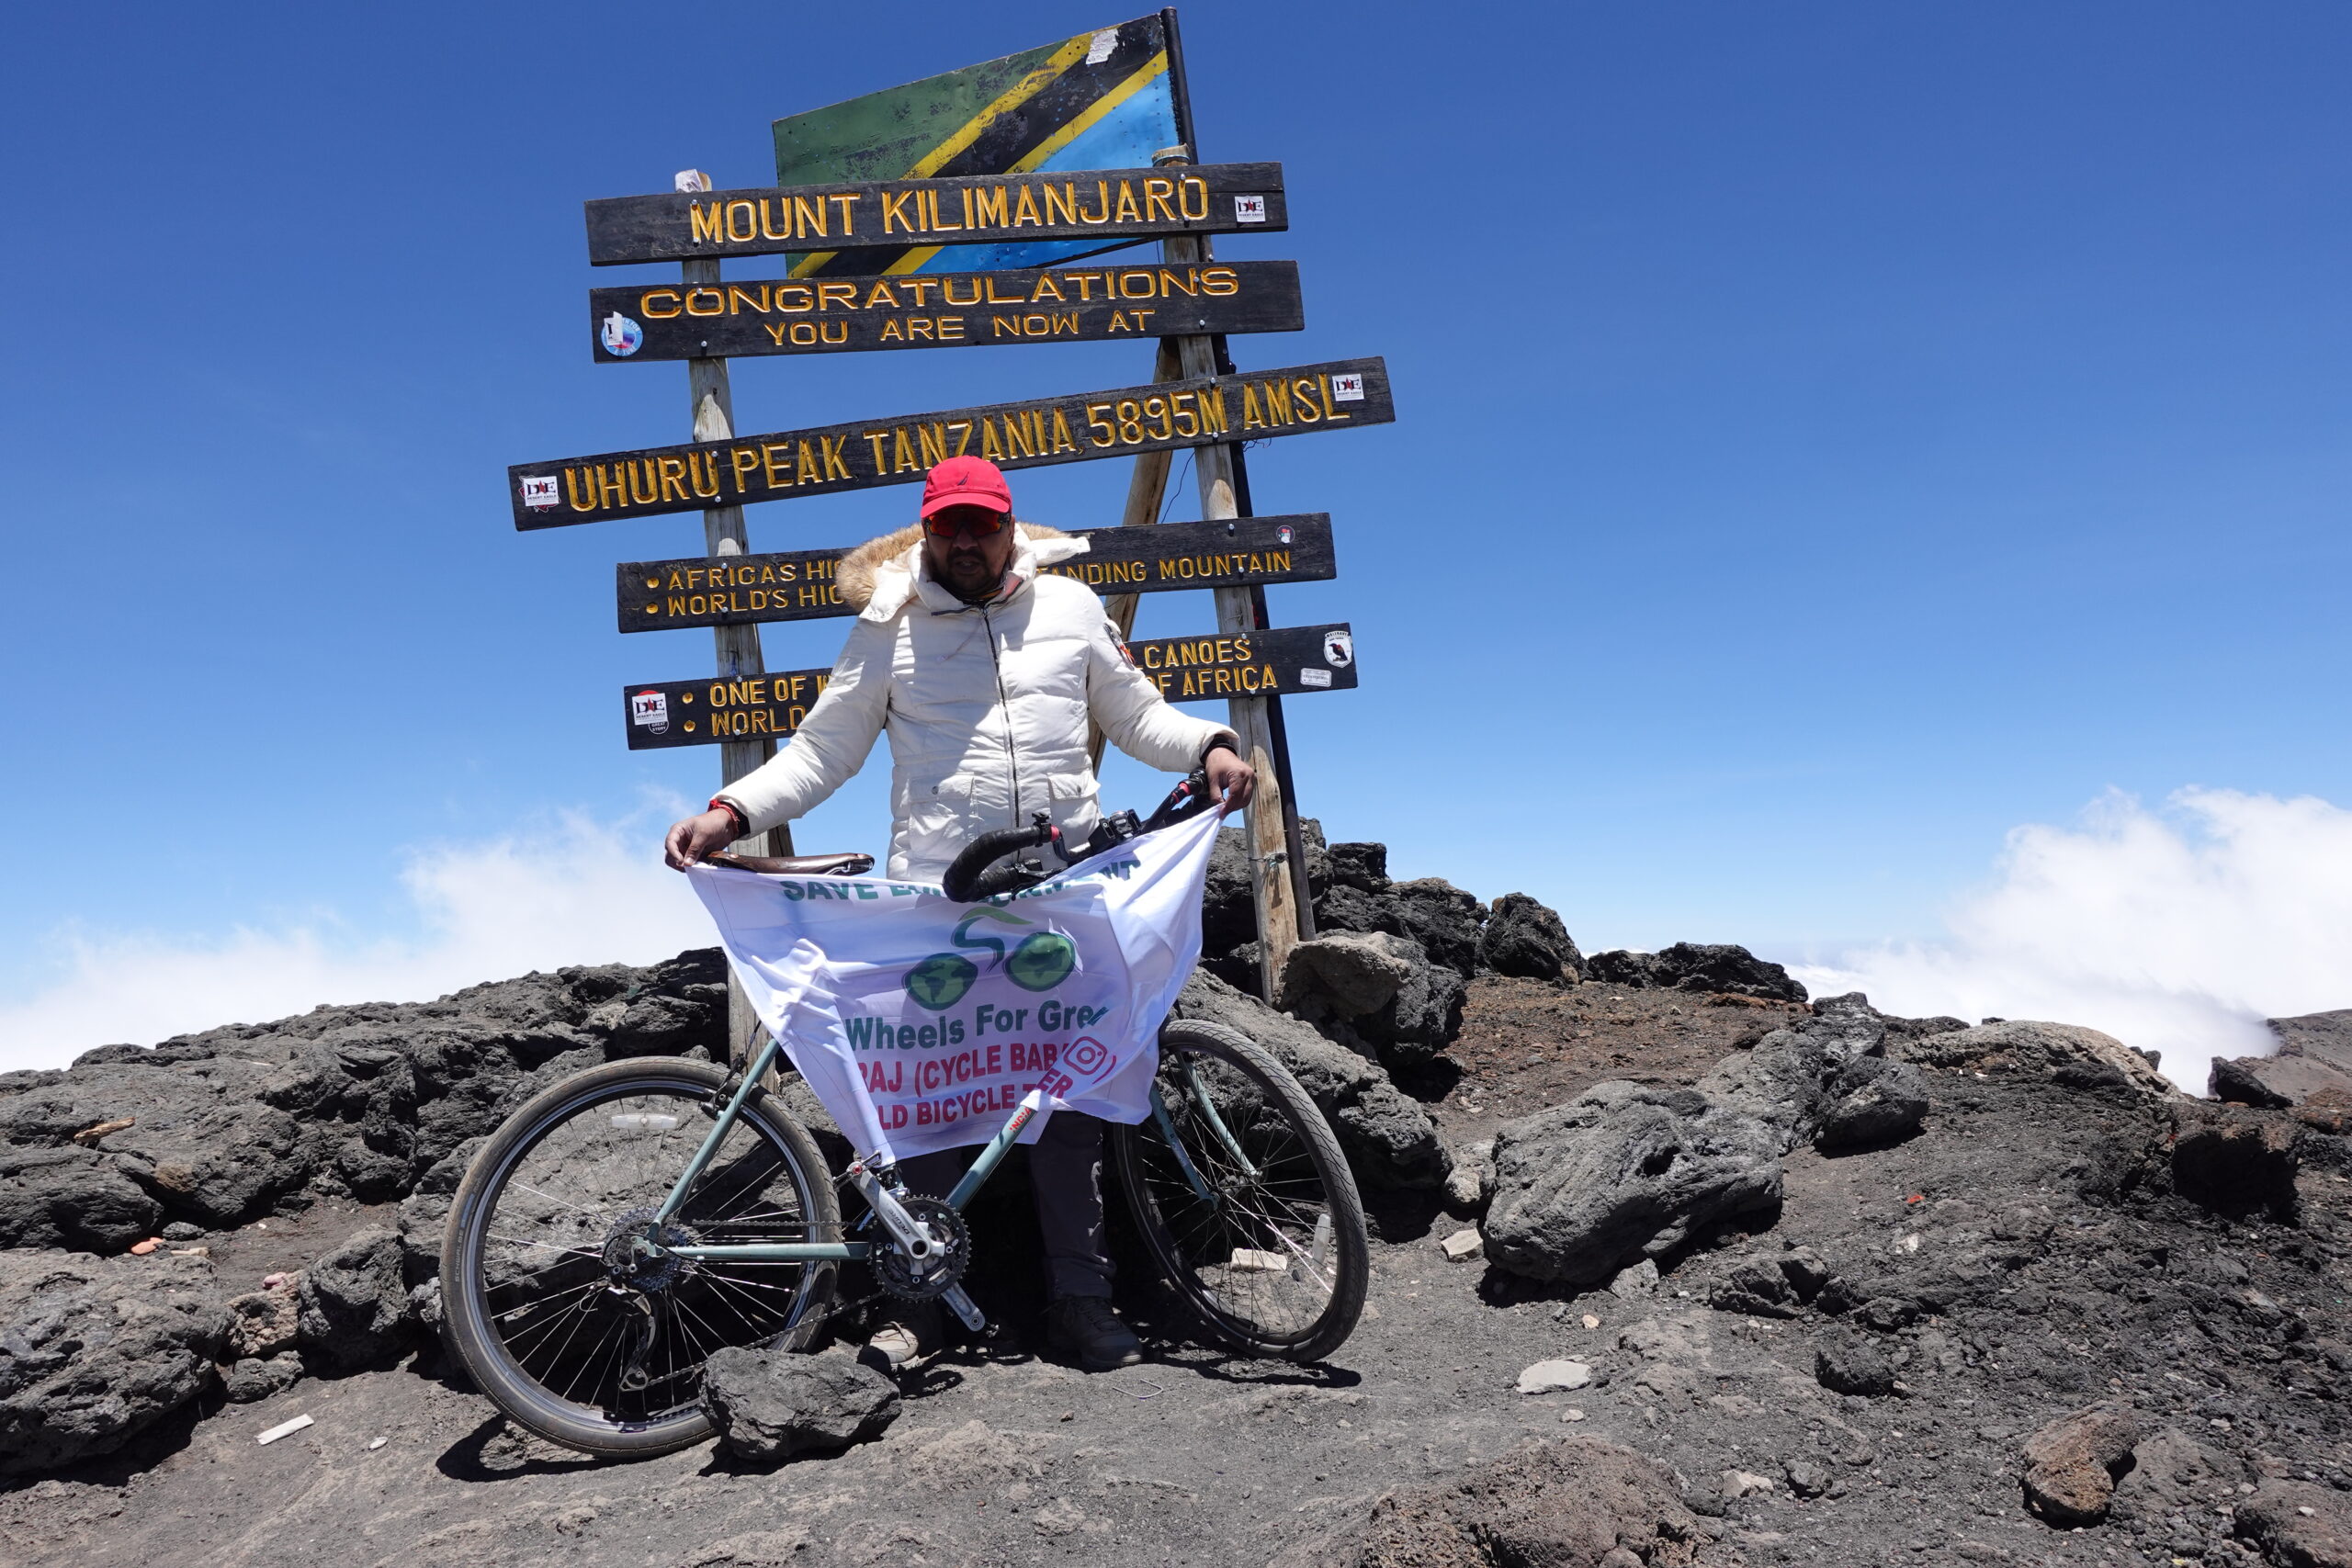 Mount kilimanjaro (highest peak of africa with bicycle)